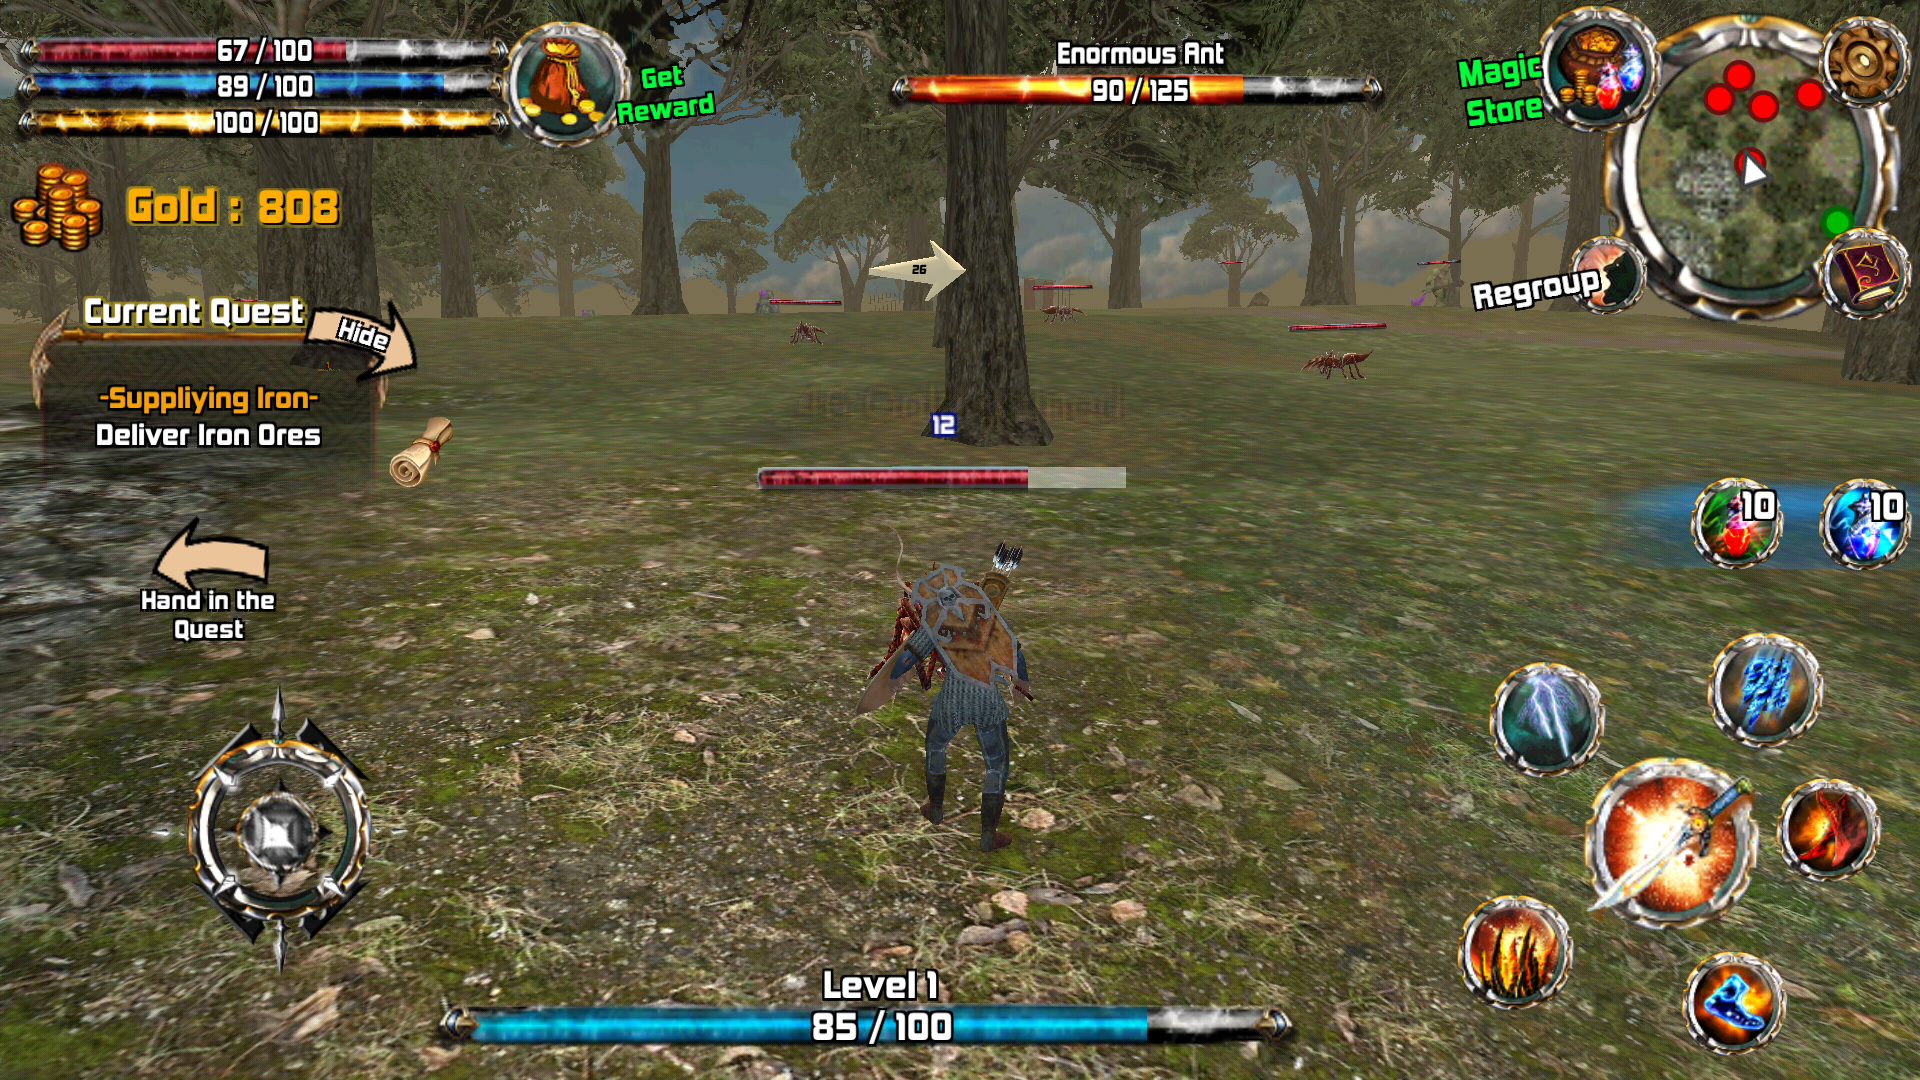 Meta quest game. Kingdom Quest Crimson Warden 3d. Kingdom Quest Crimson Warden 3d RPG читы. РПГ на андроид с гильдией воров. РПГ на плече.